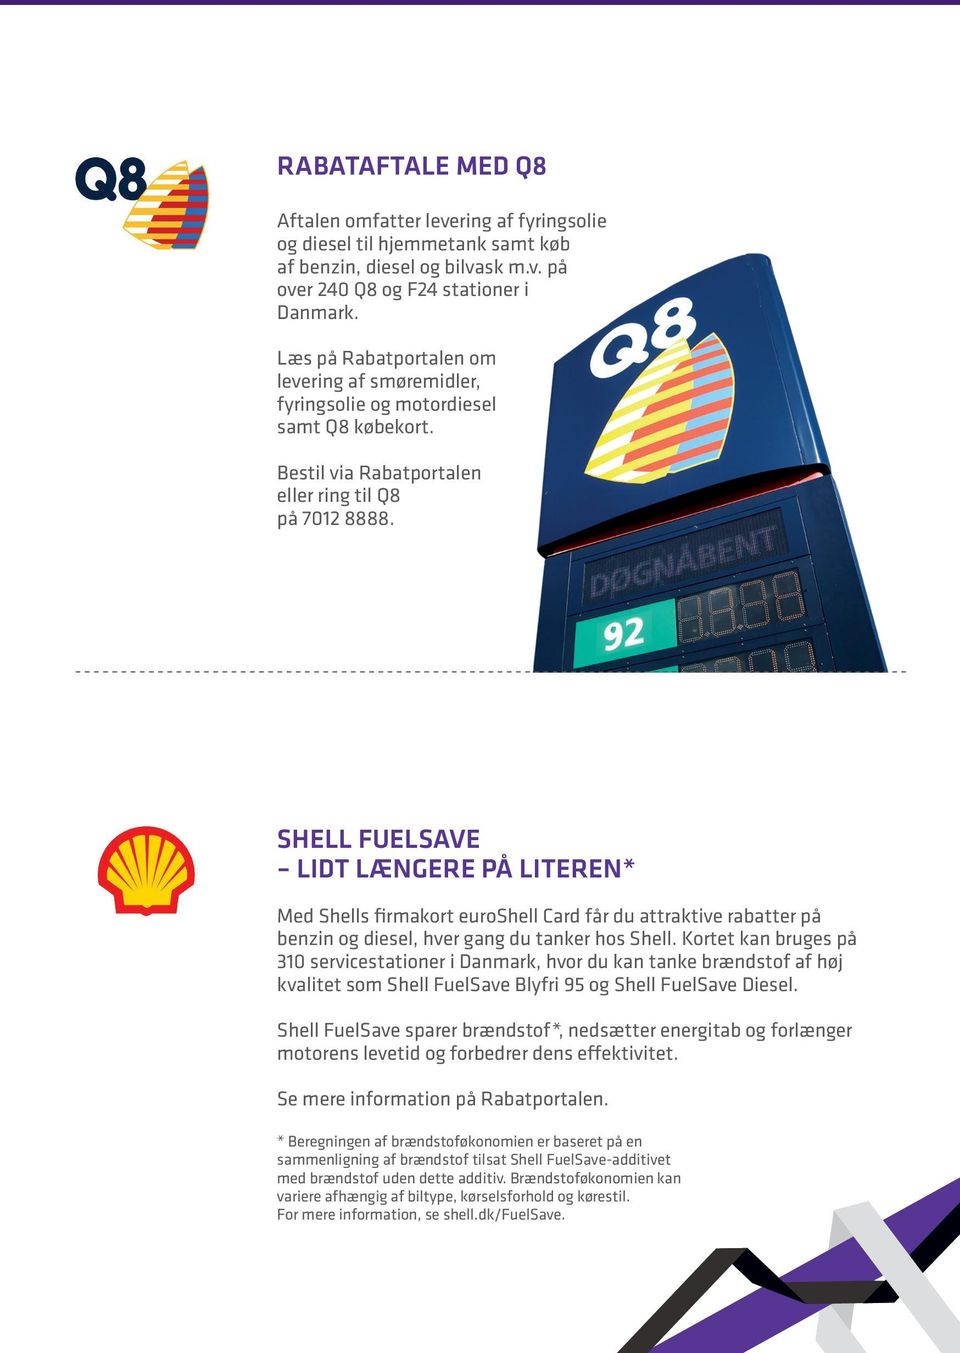 Shell fuelsave lidt længere på literen* Med Shells firmakort euroshell Card får du attraktive rabatter på benzin og diesel, hver gang du tanker hos Shell.